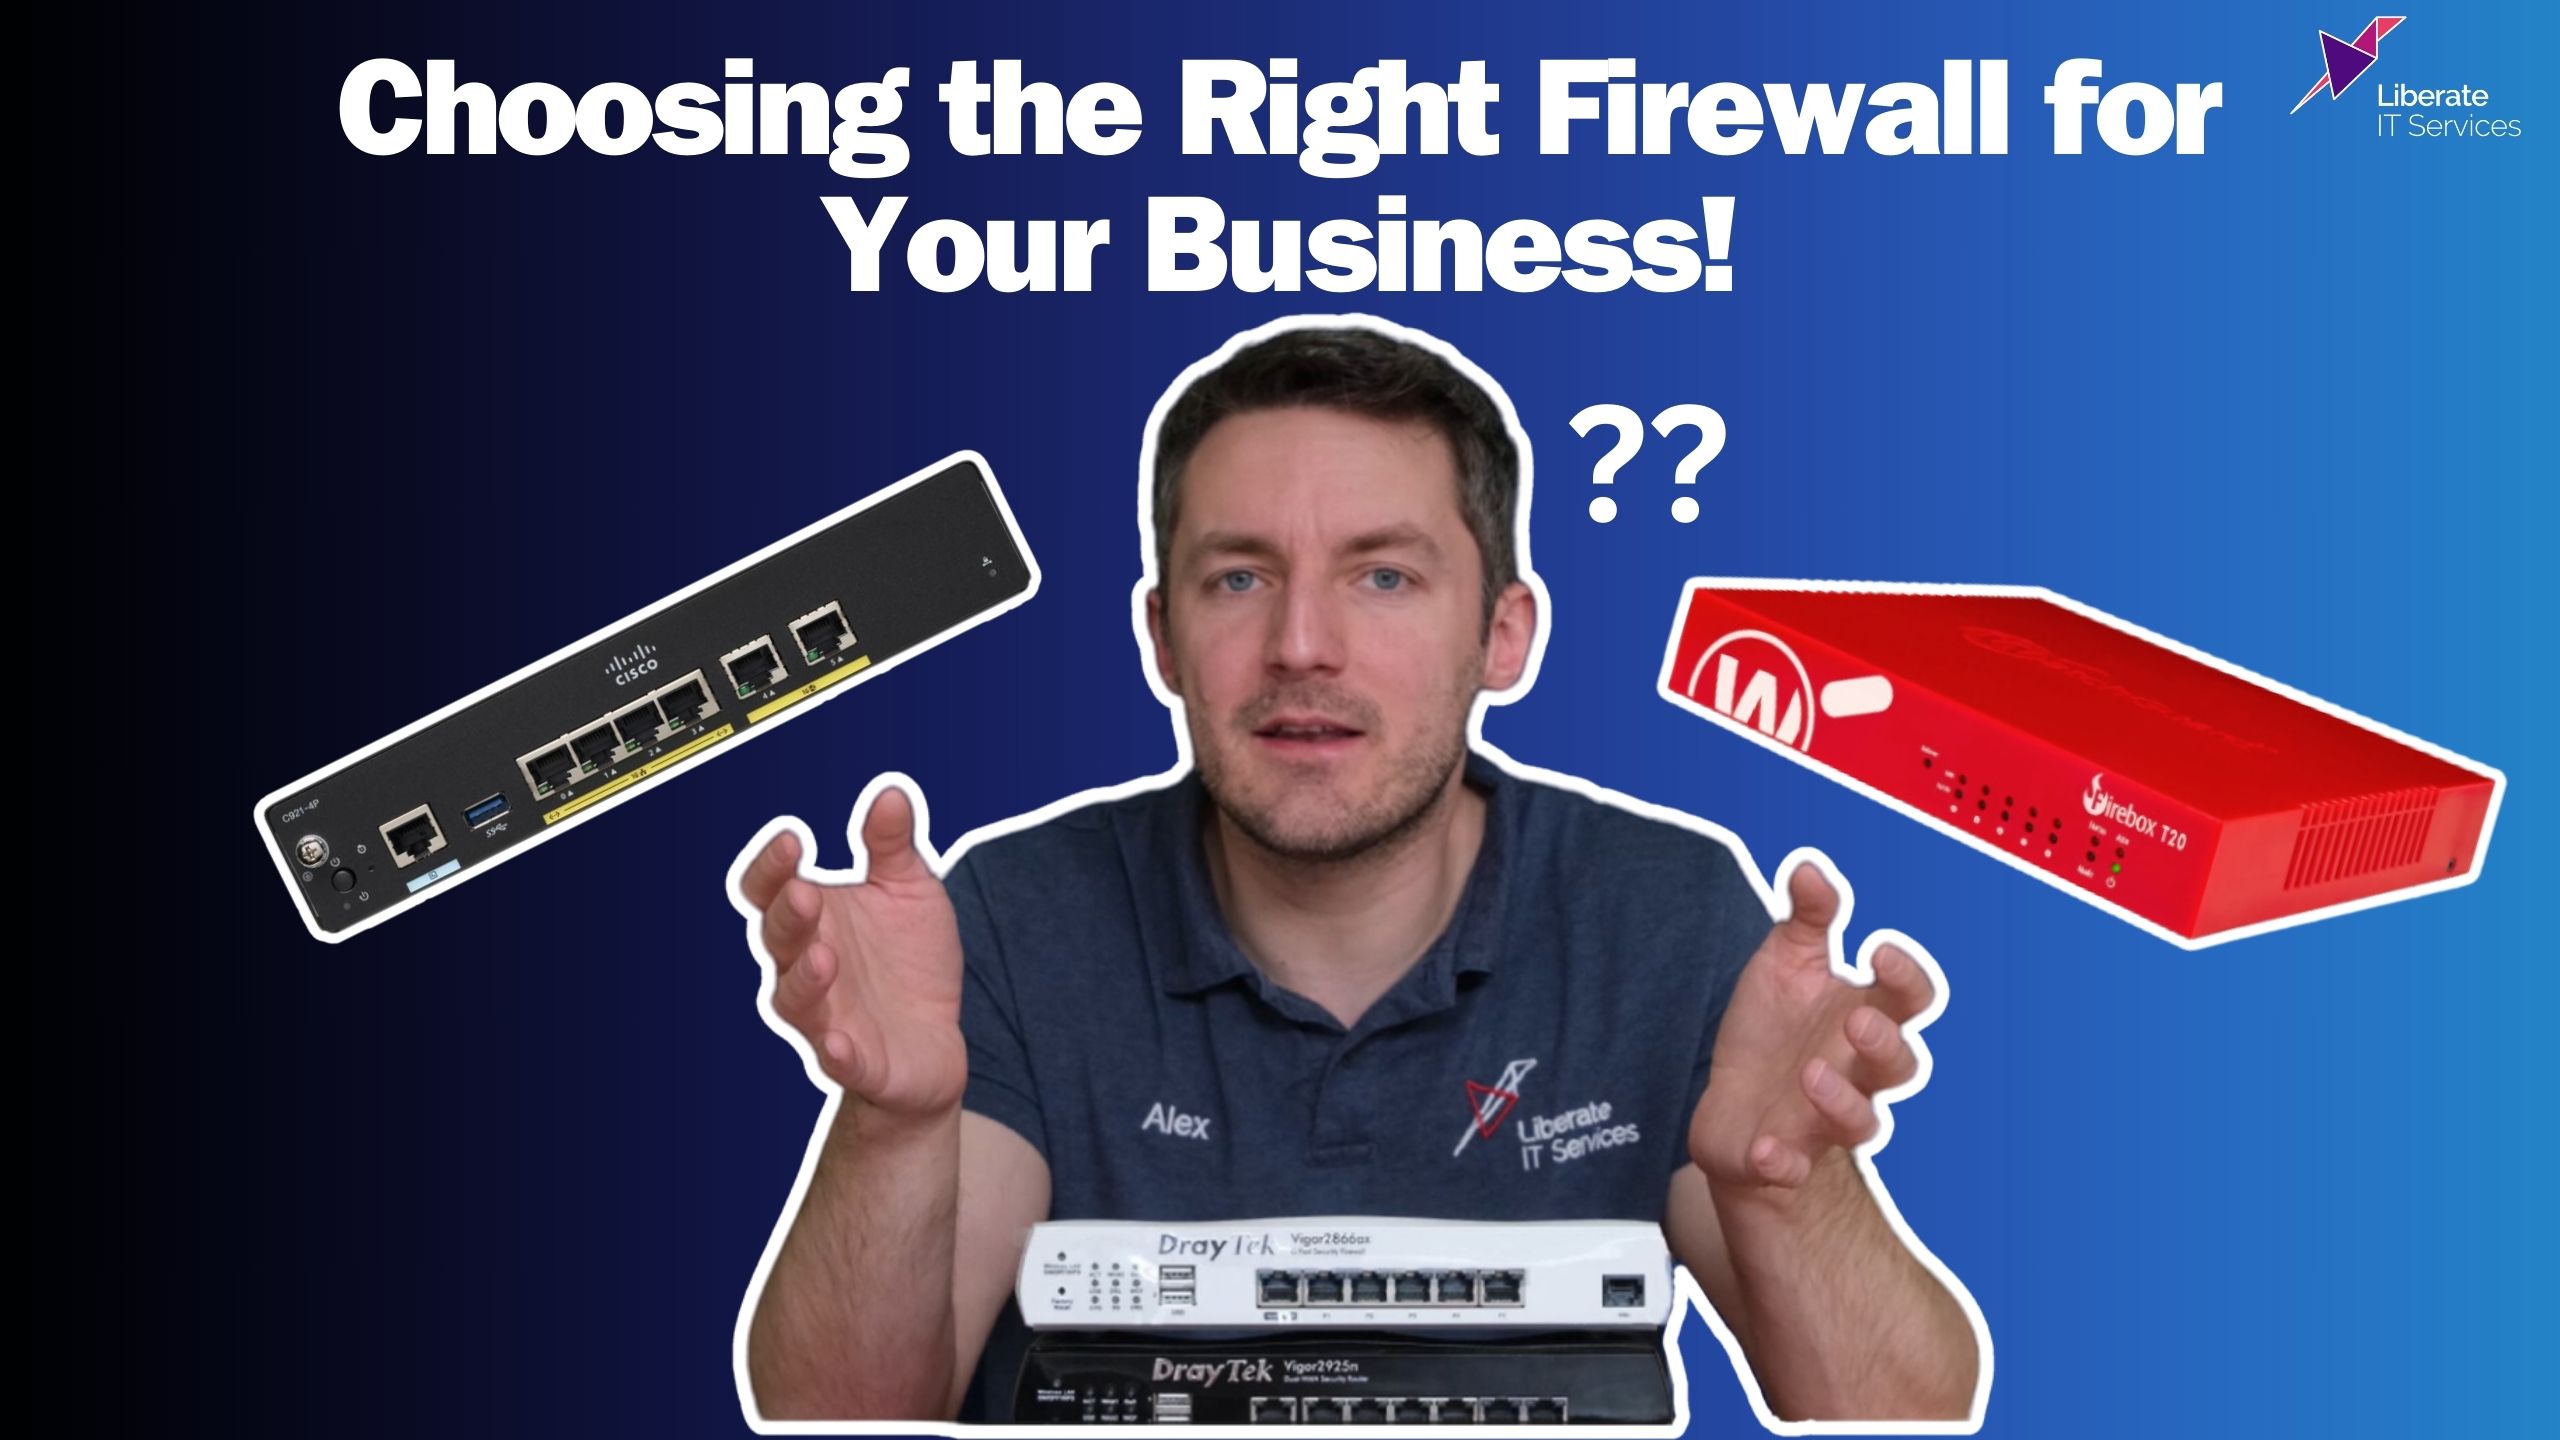 Choosing a firewall